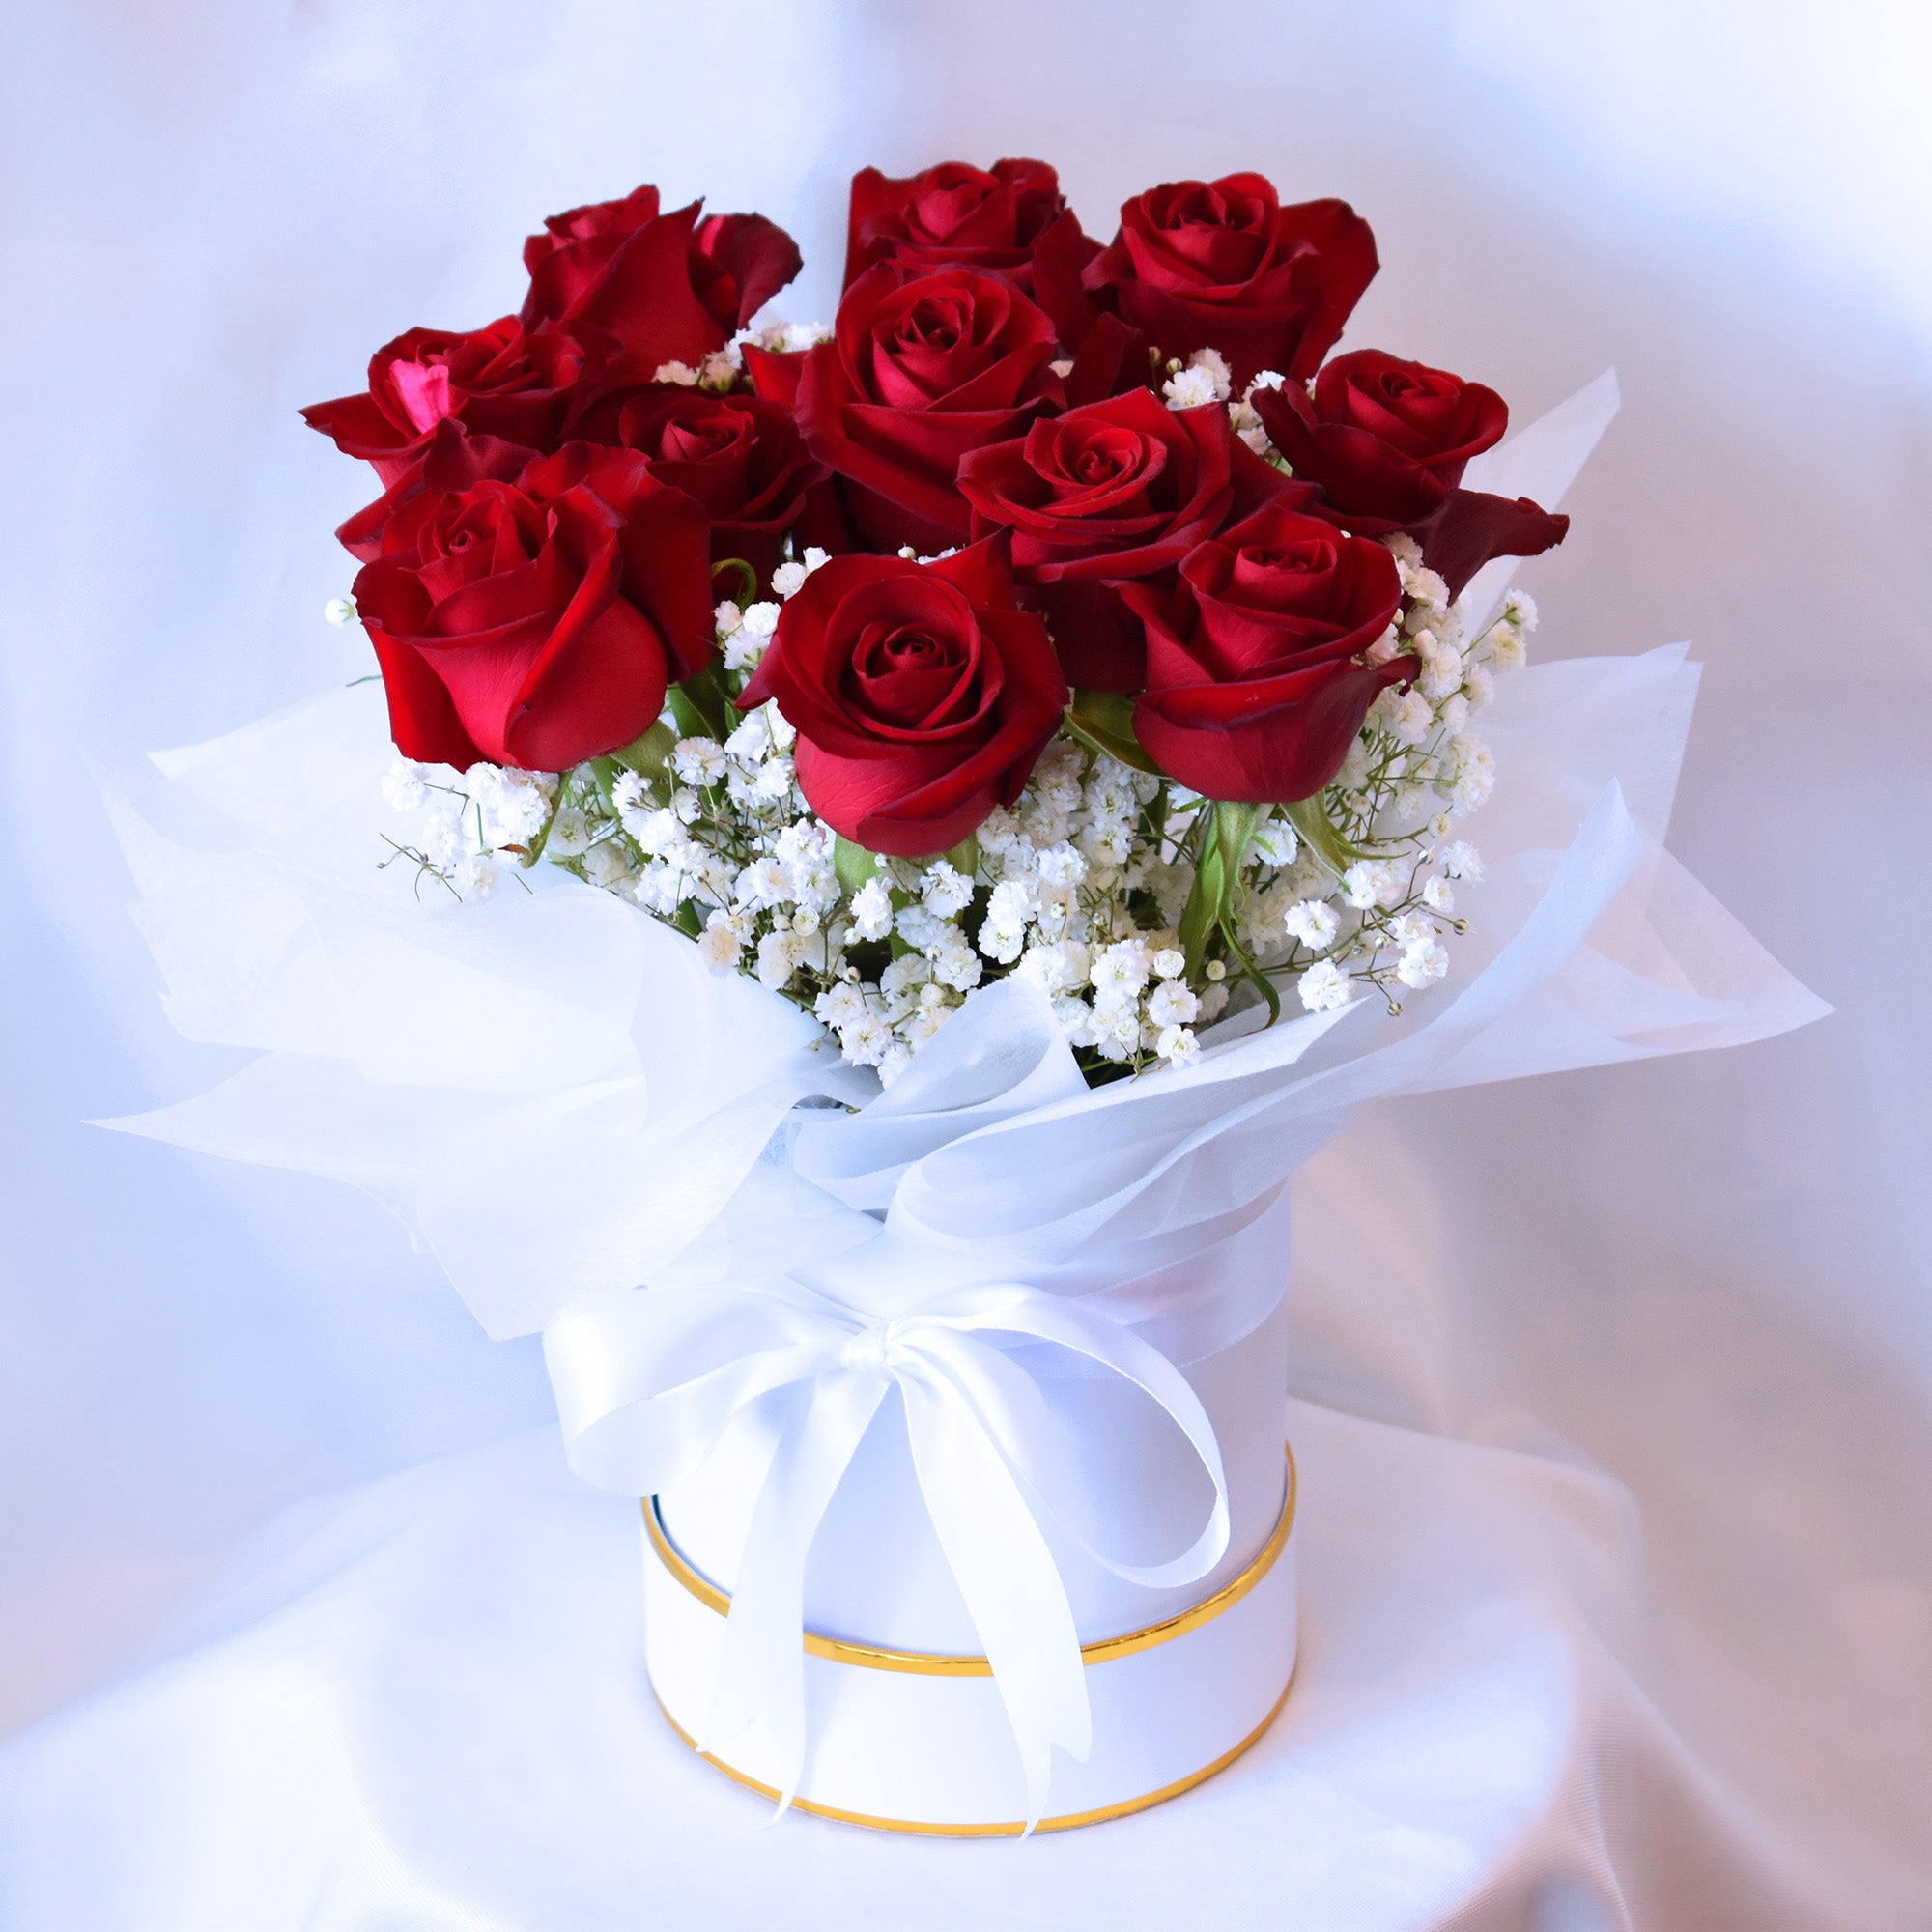 Flower arrangement red roses in white hatbox